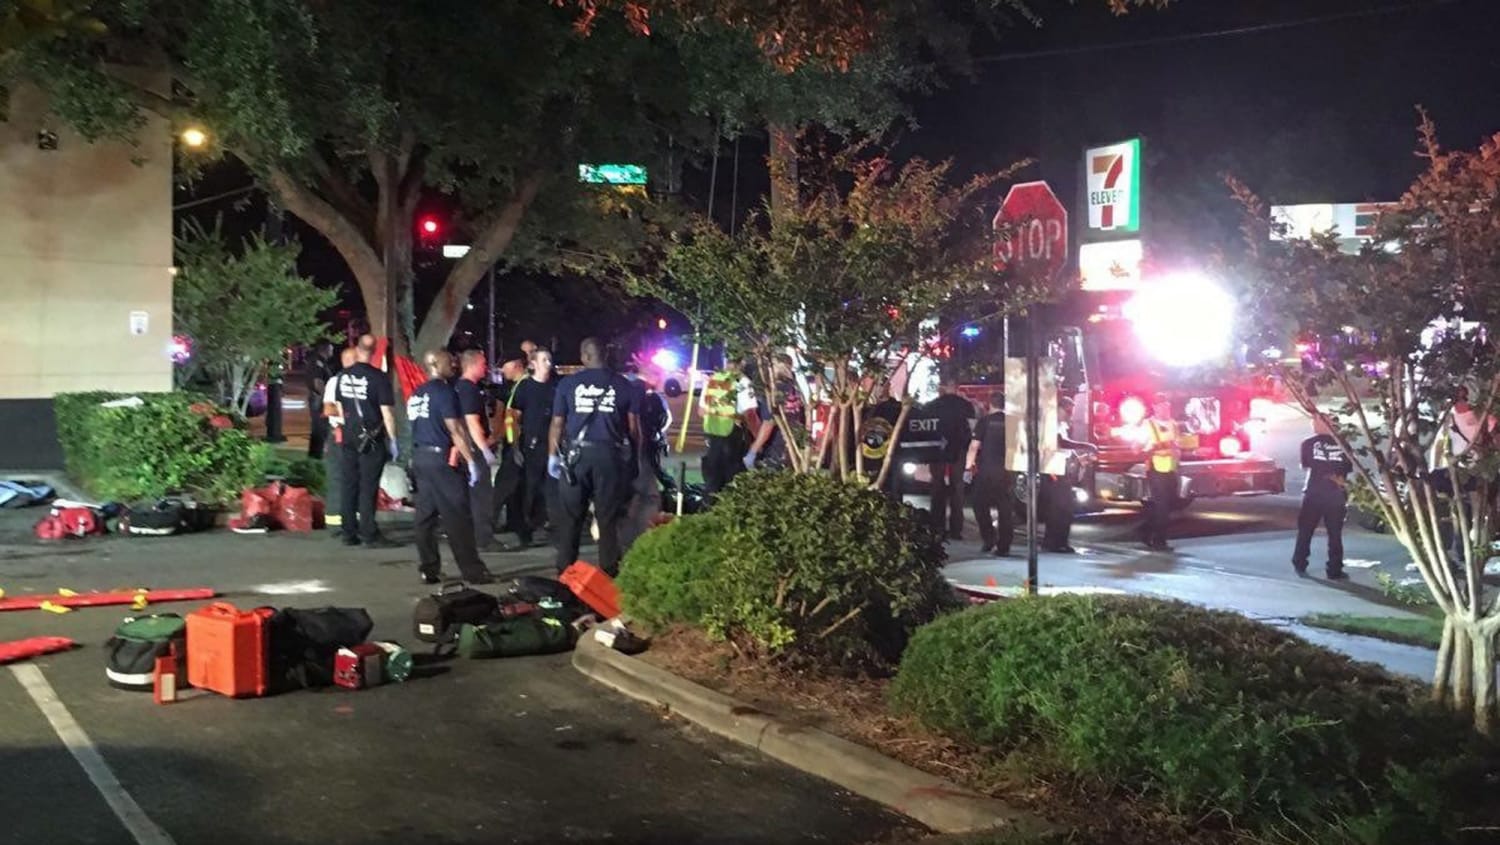 Orlando Nightclub Shooting Mass Casualties After Gunman Opens Fire In Gay Club